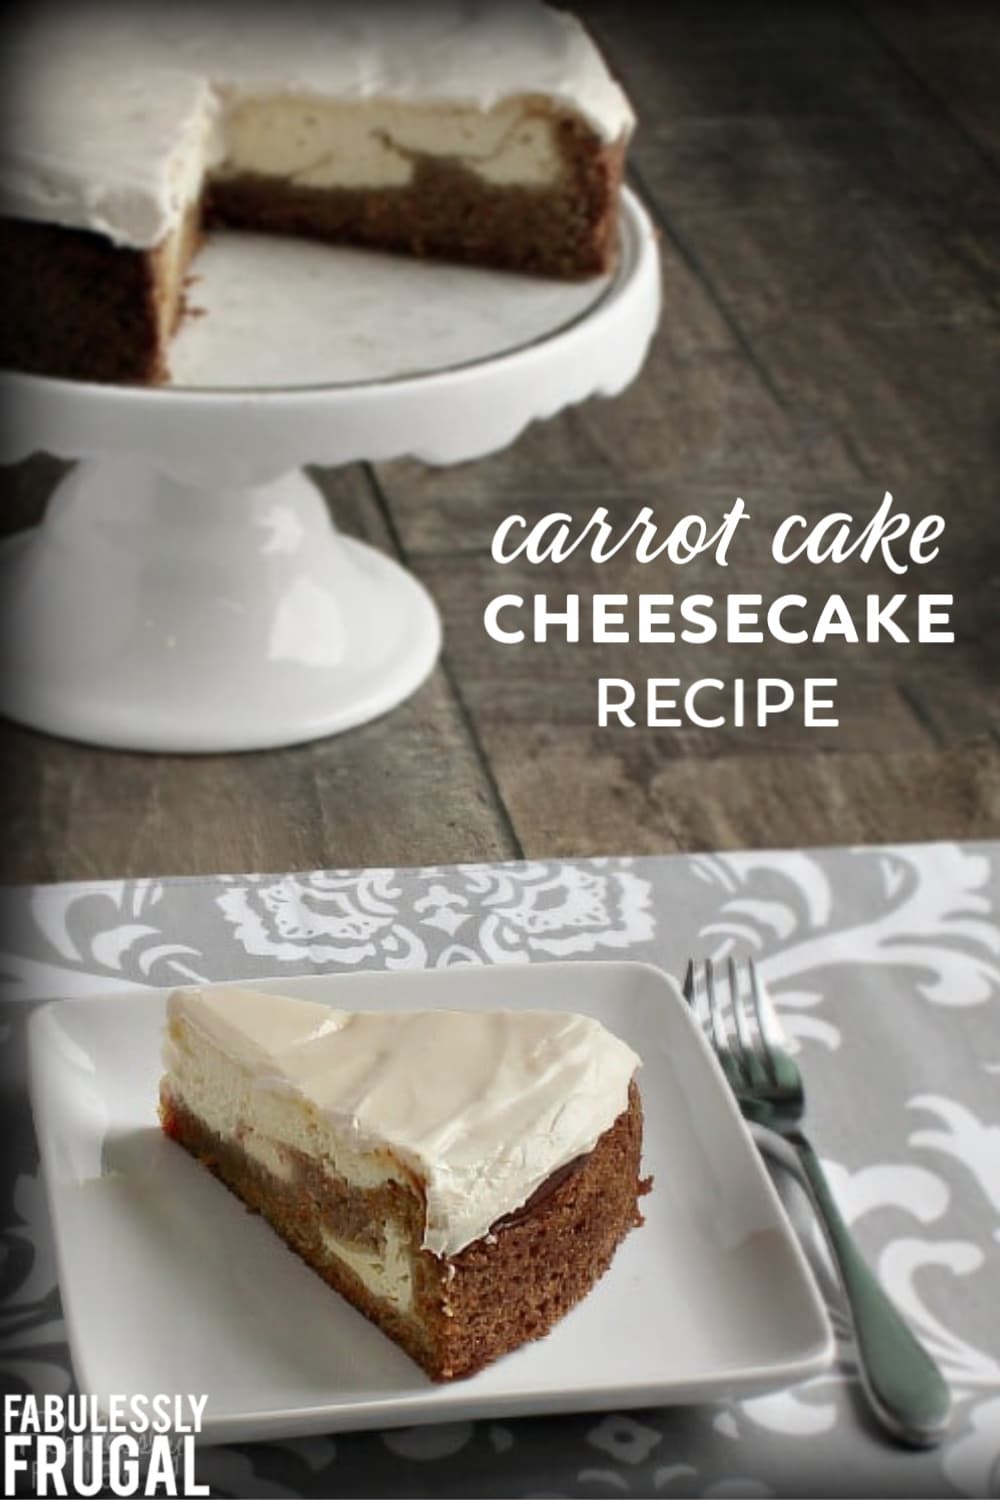 Carrot cheesecake recipe